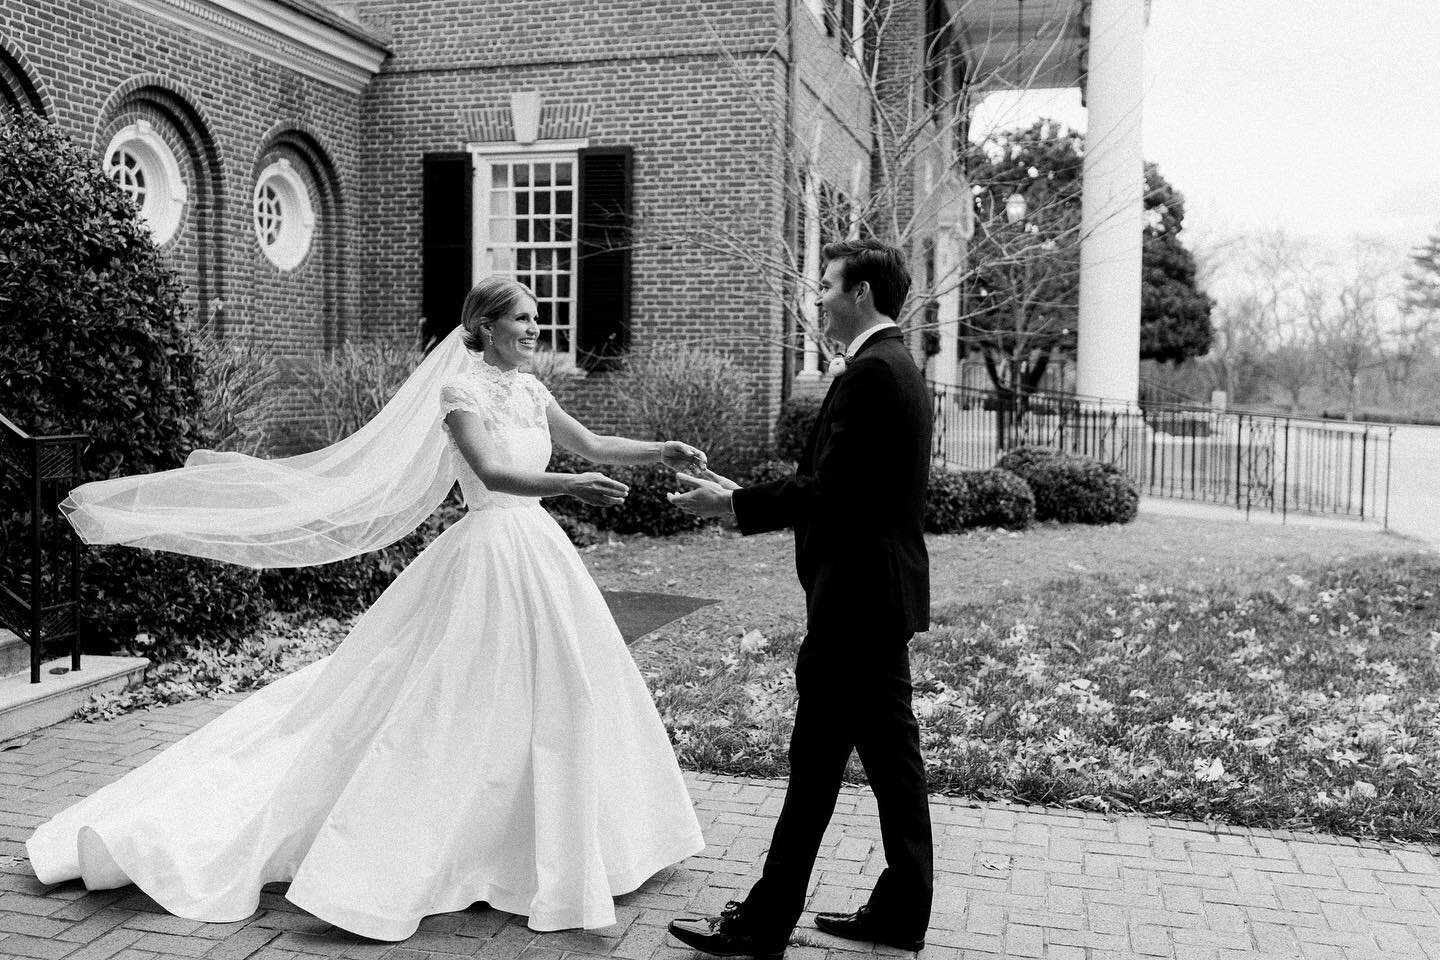 First look magic in action! 🤍🖤
.
.
#firstlook #weddingwednesday #brideandgroom #firstlookwedding #bride #blackandwhite #weddingphotography #weddingplanning #weddingplanner